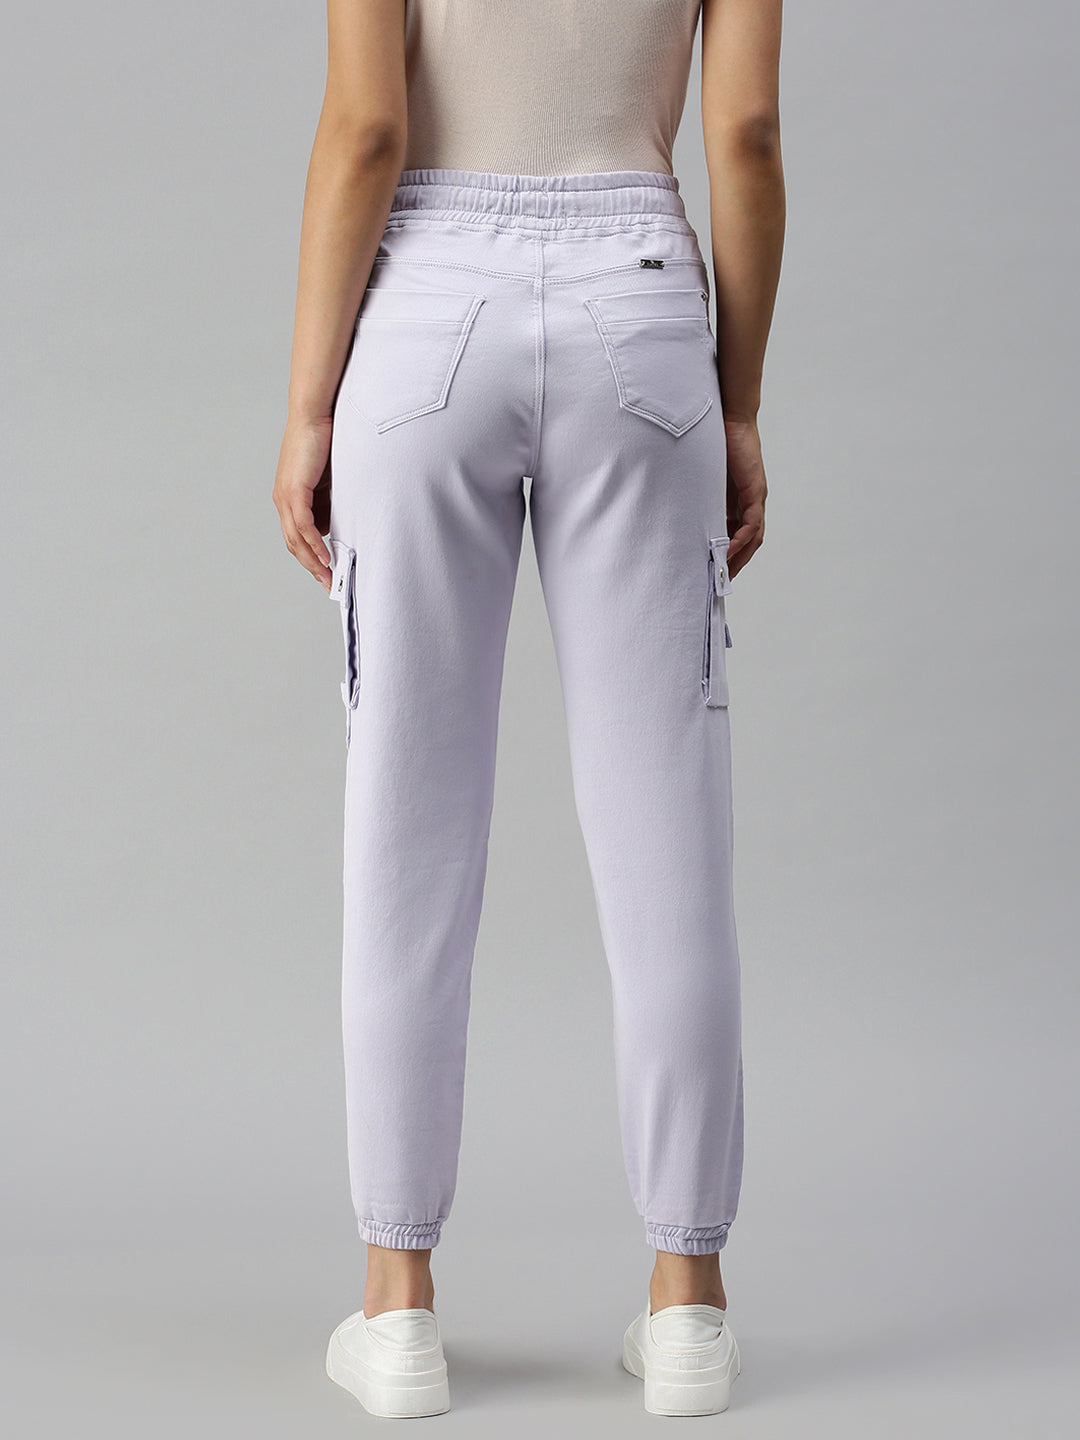 Women's Lavender Solid Jogger Denim Jeans